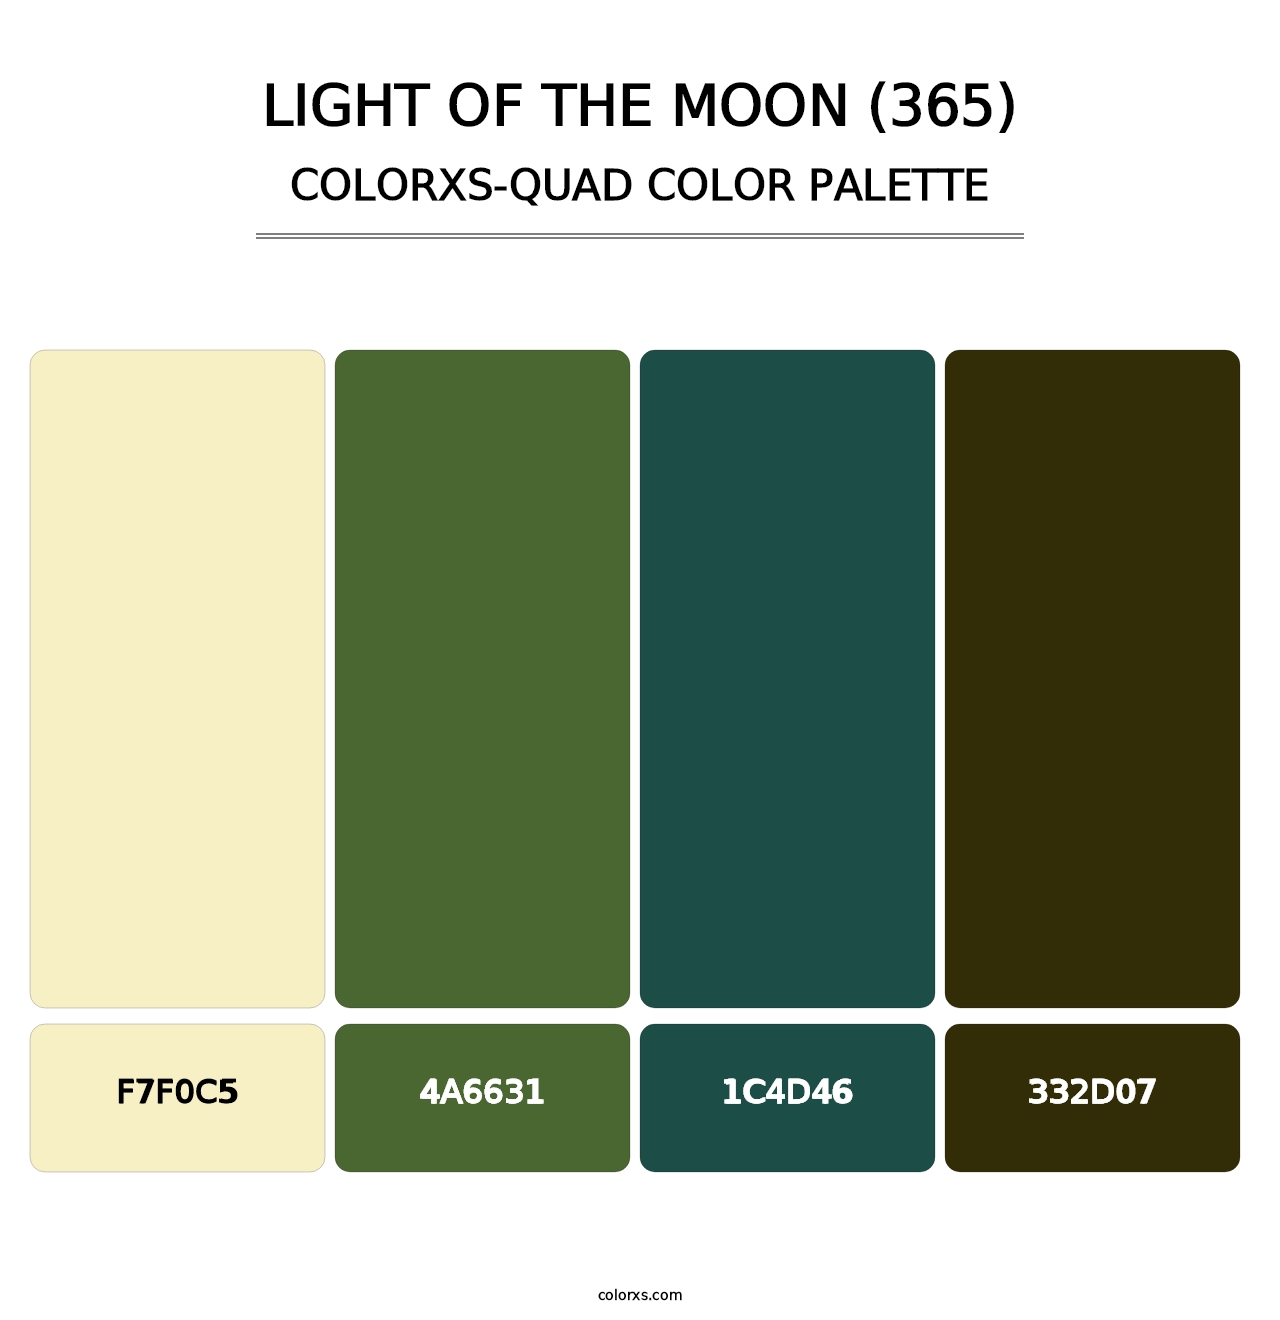 Light of the Moon (365) - Colorxs Quad Palette